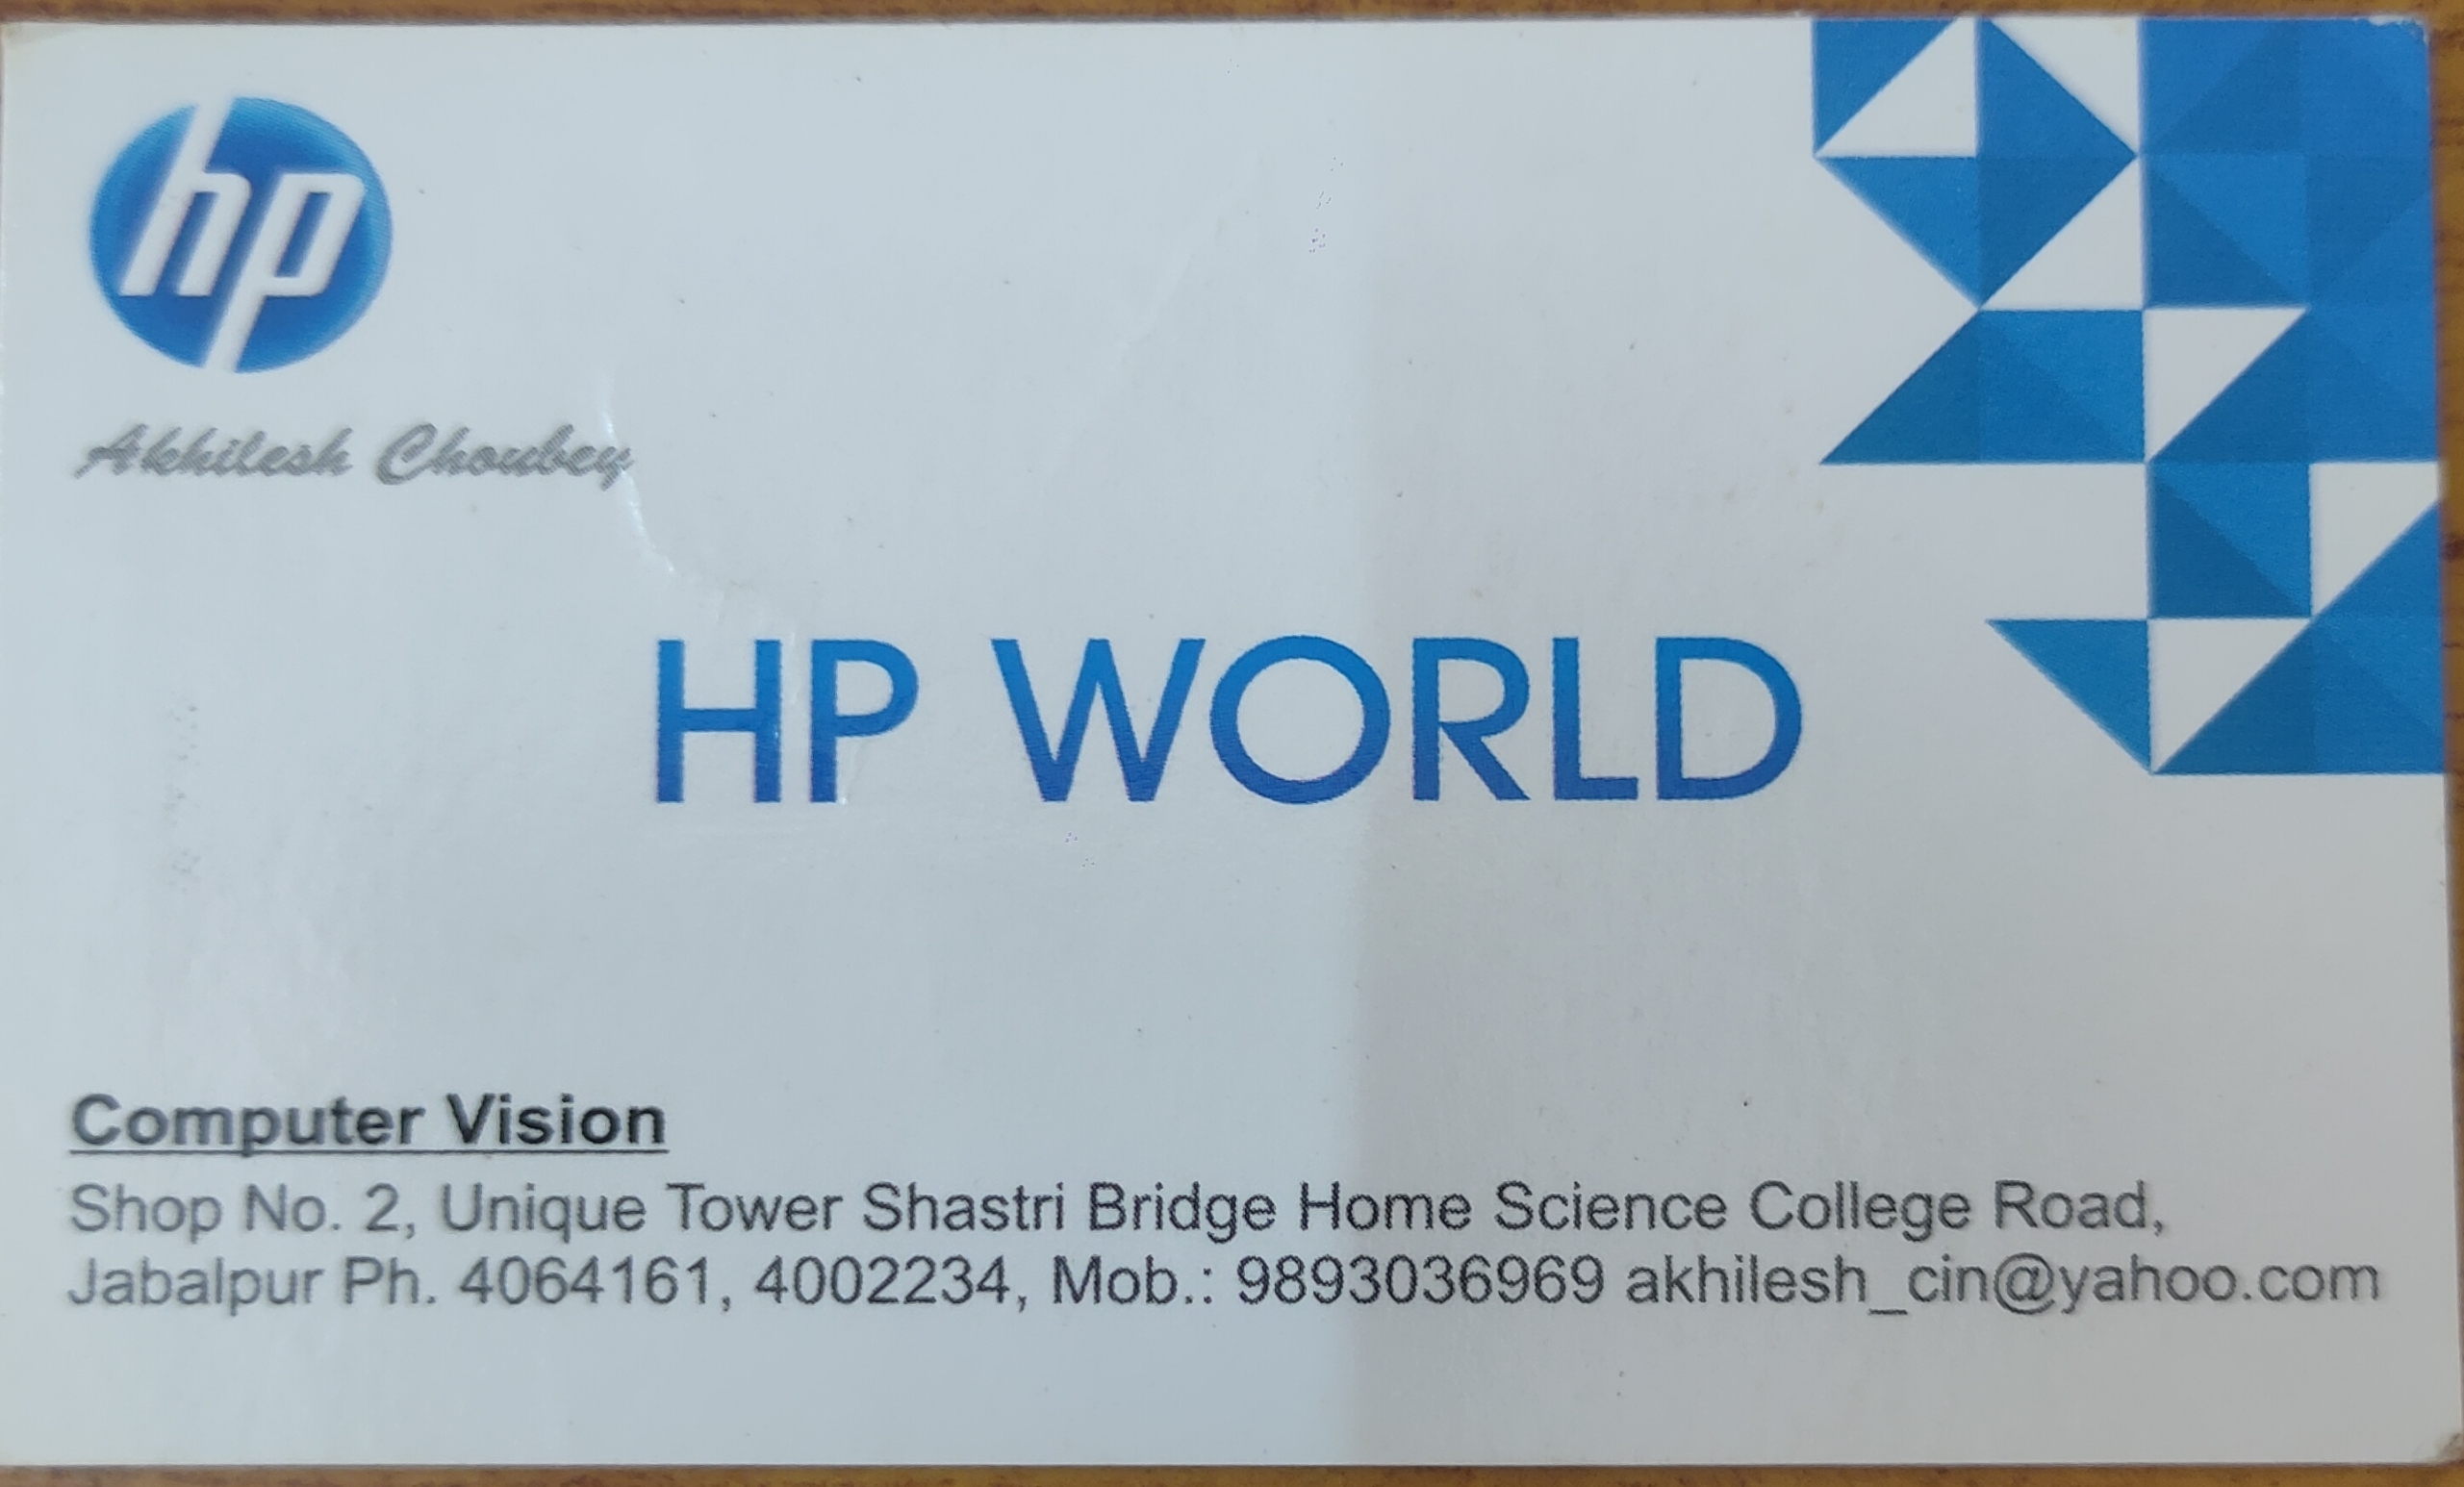 HP World Jabalpur